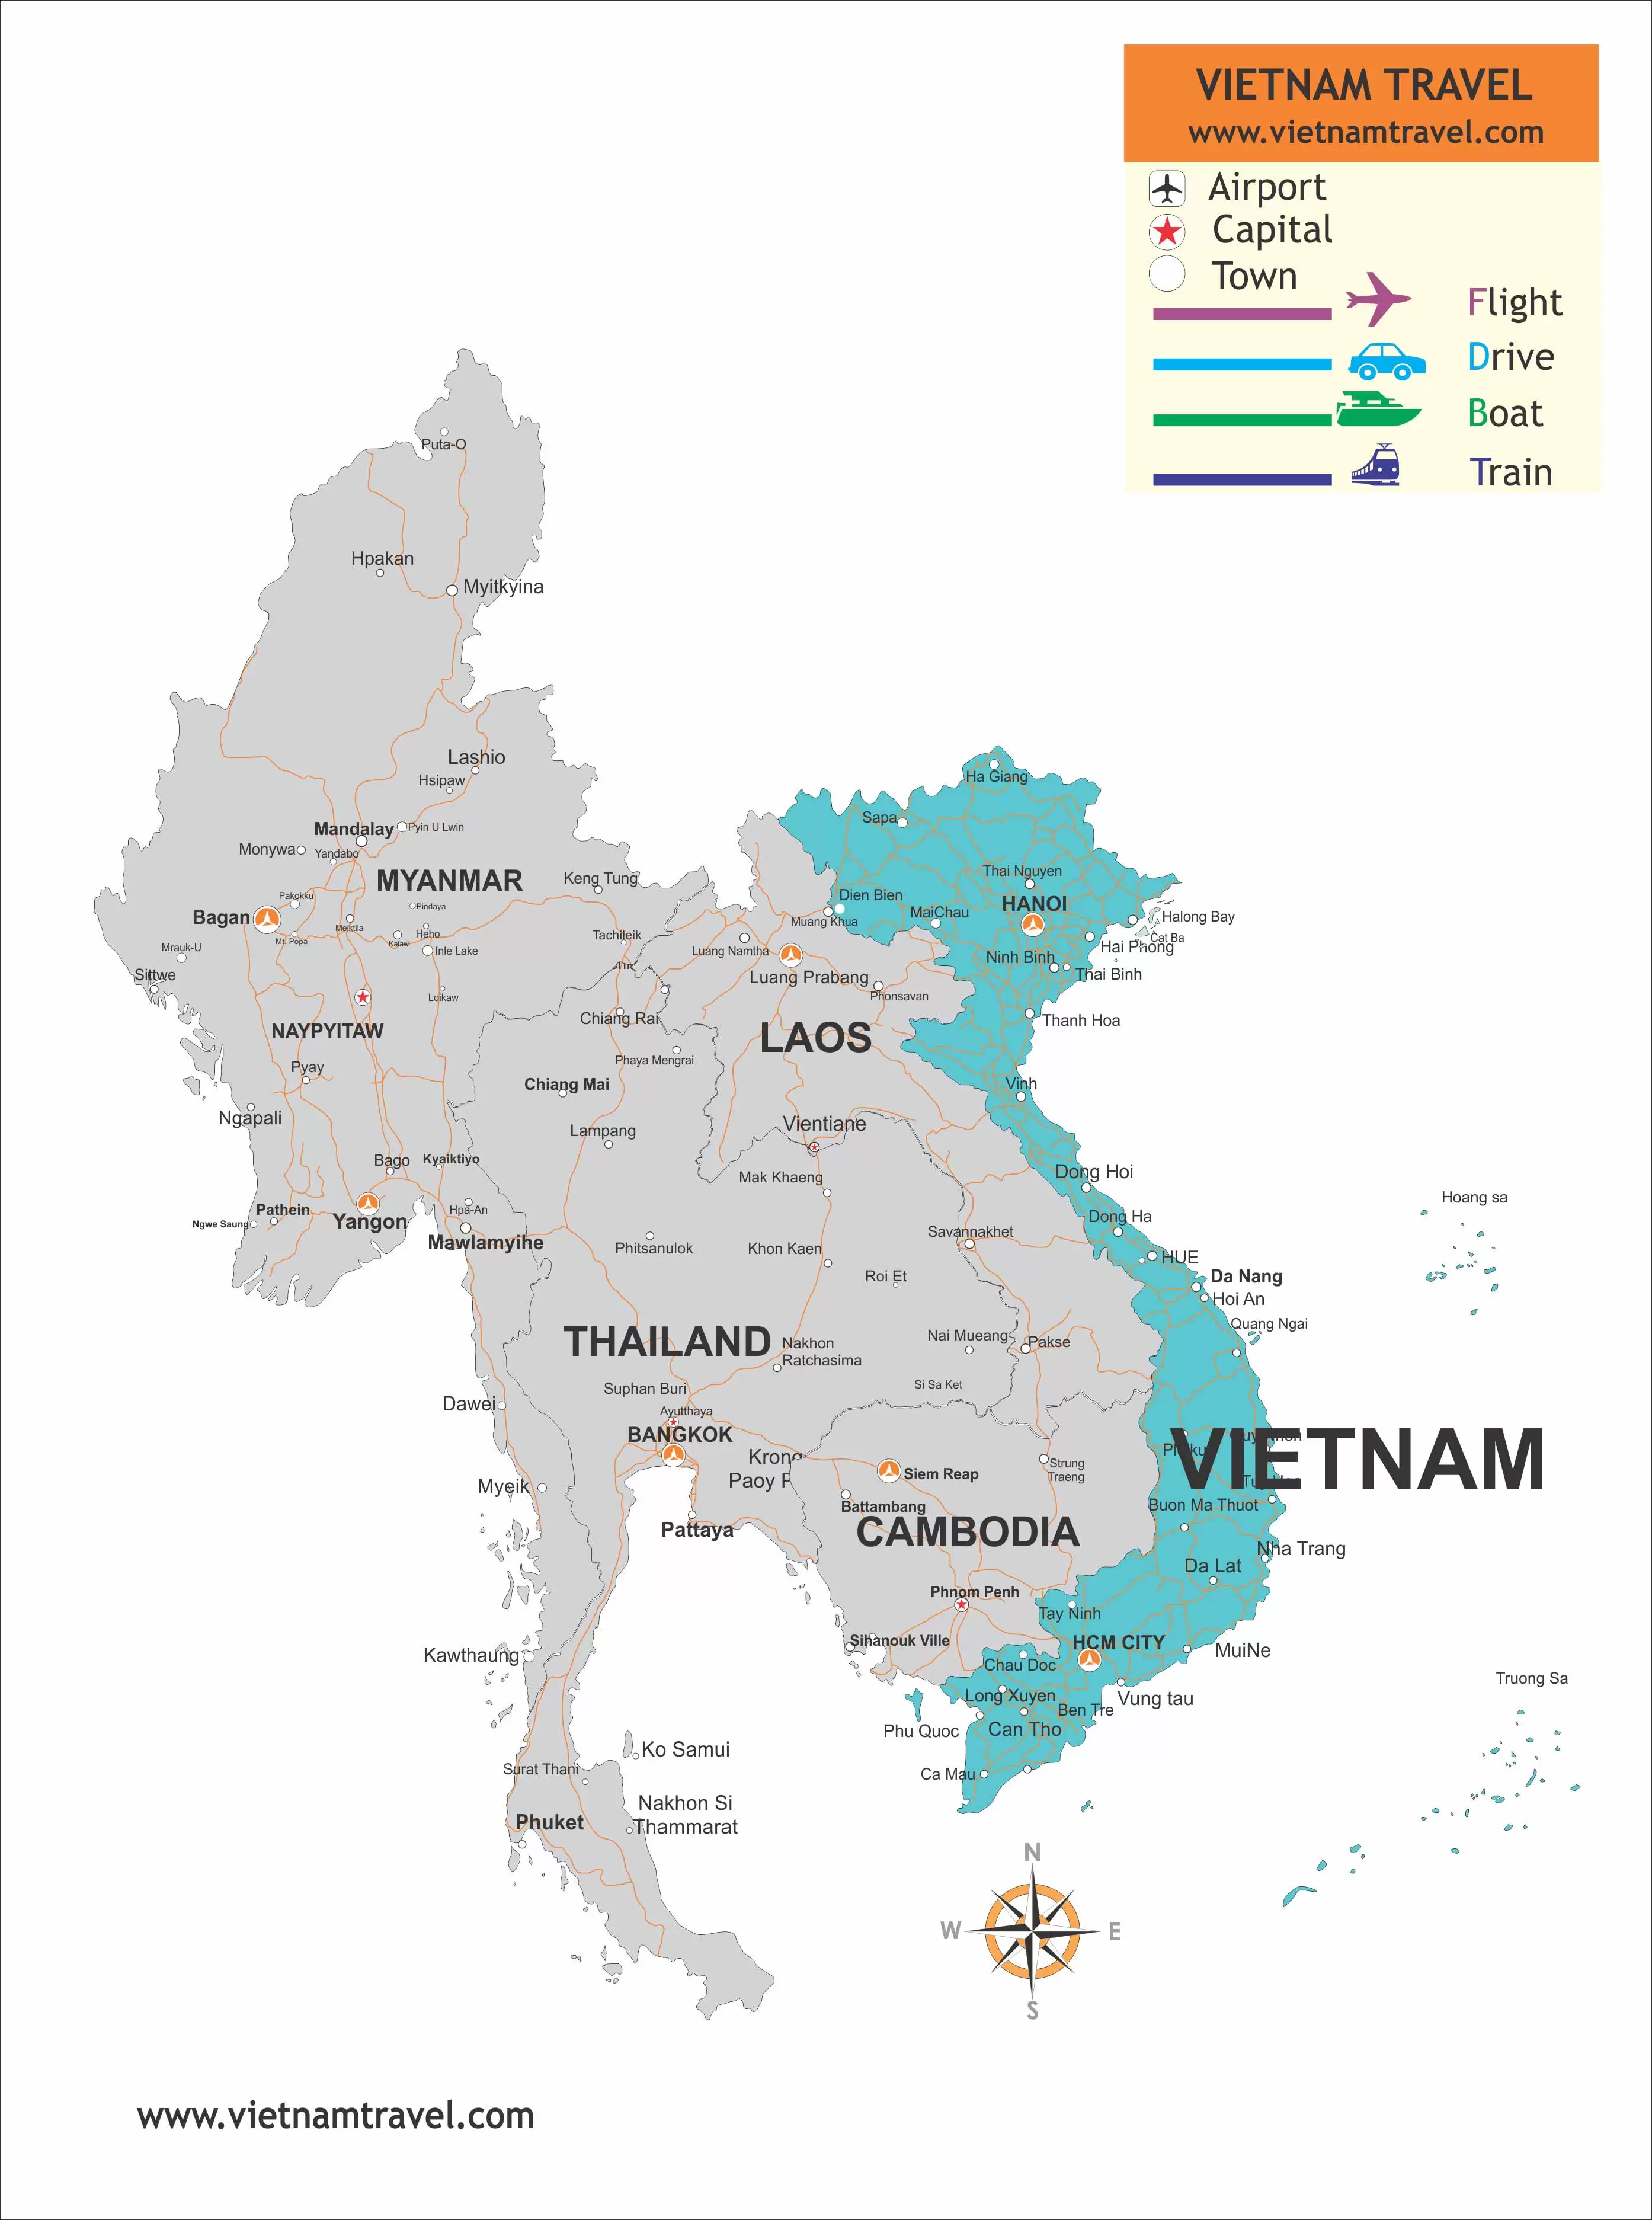 A Travel Map of Vietnam